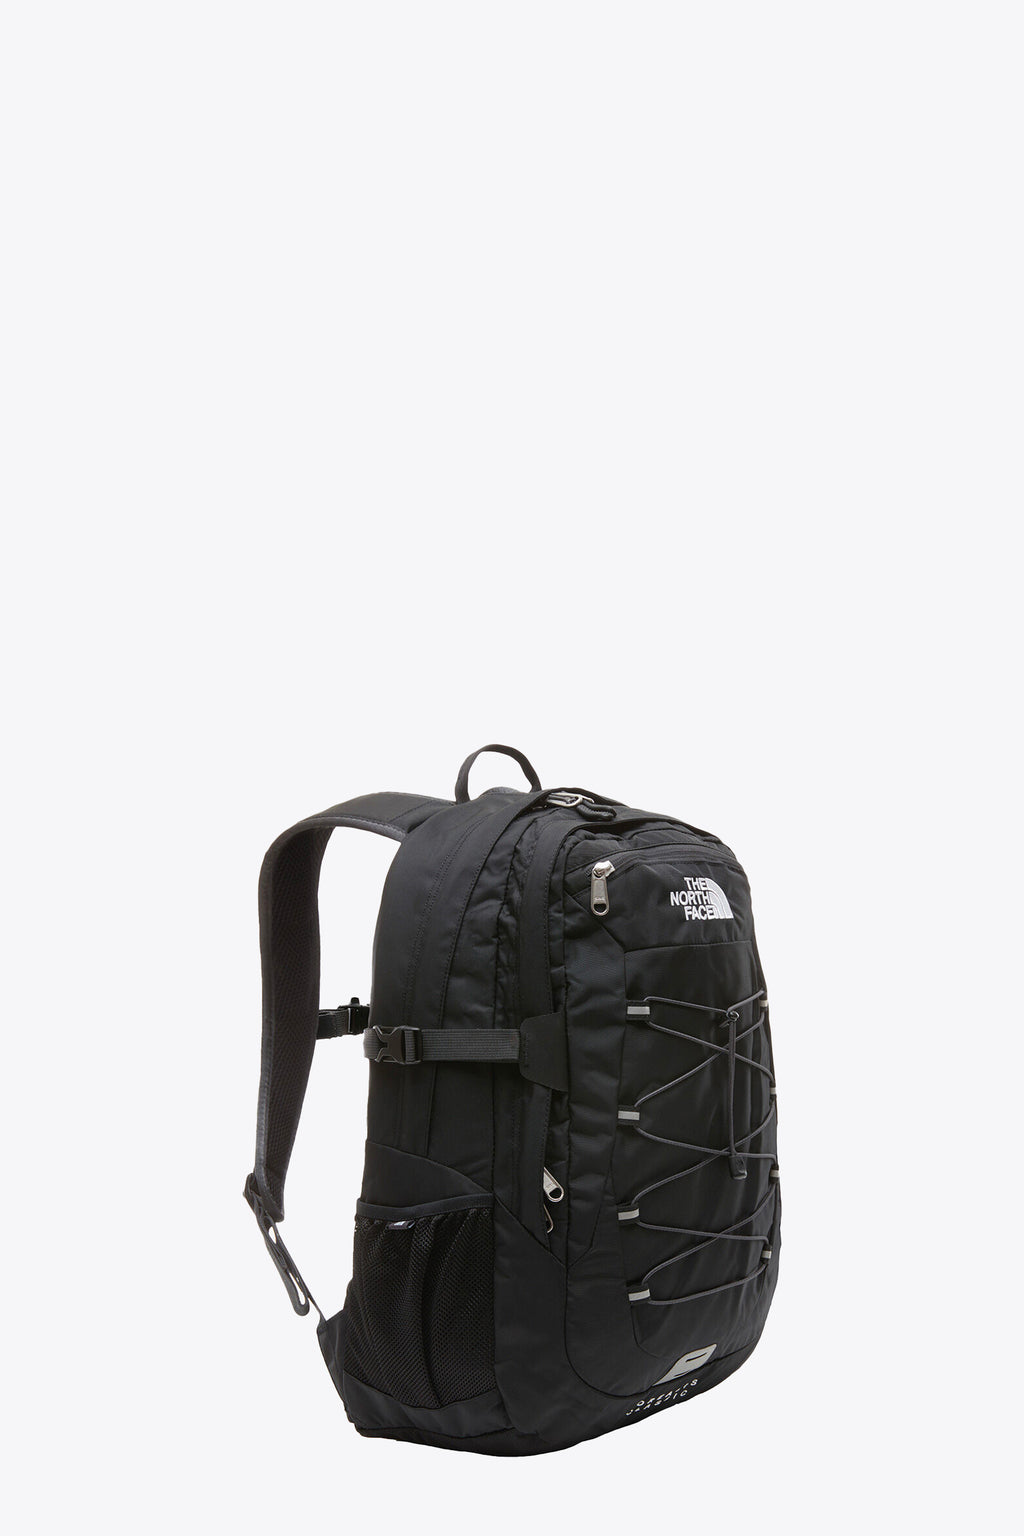 alt-image__Black-nylon-backpack---Borealis-classic